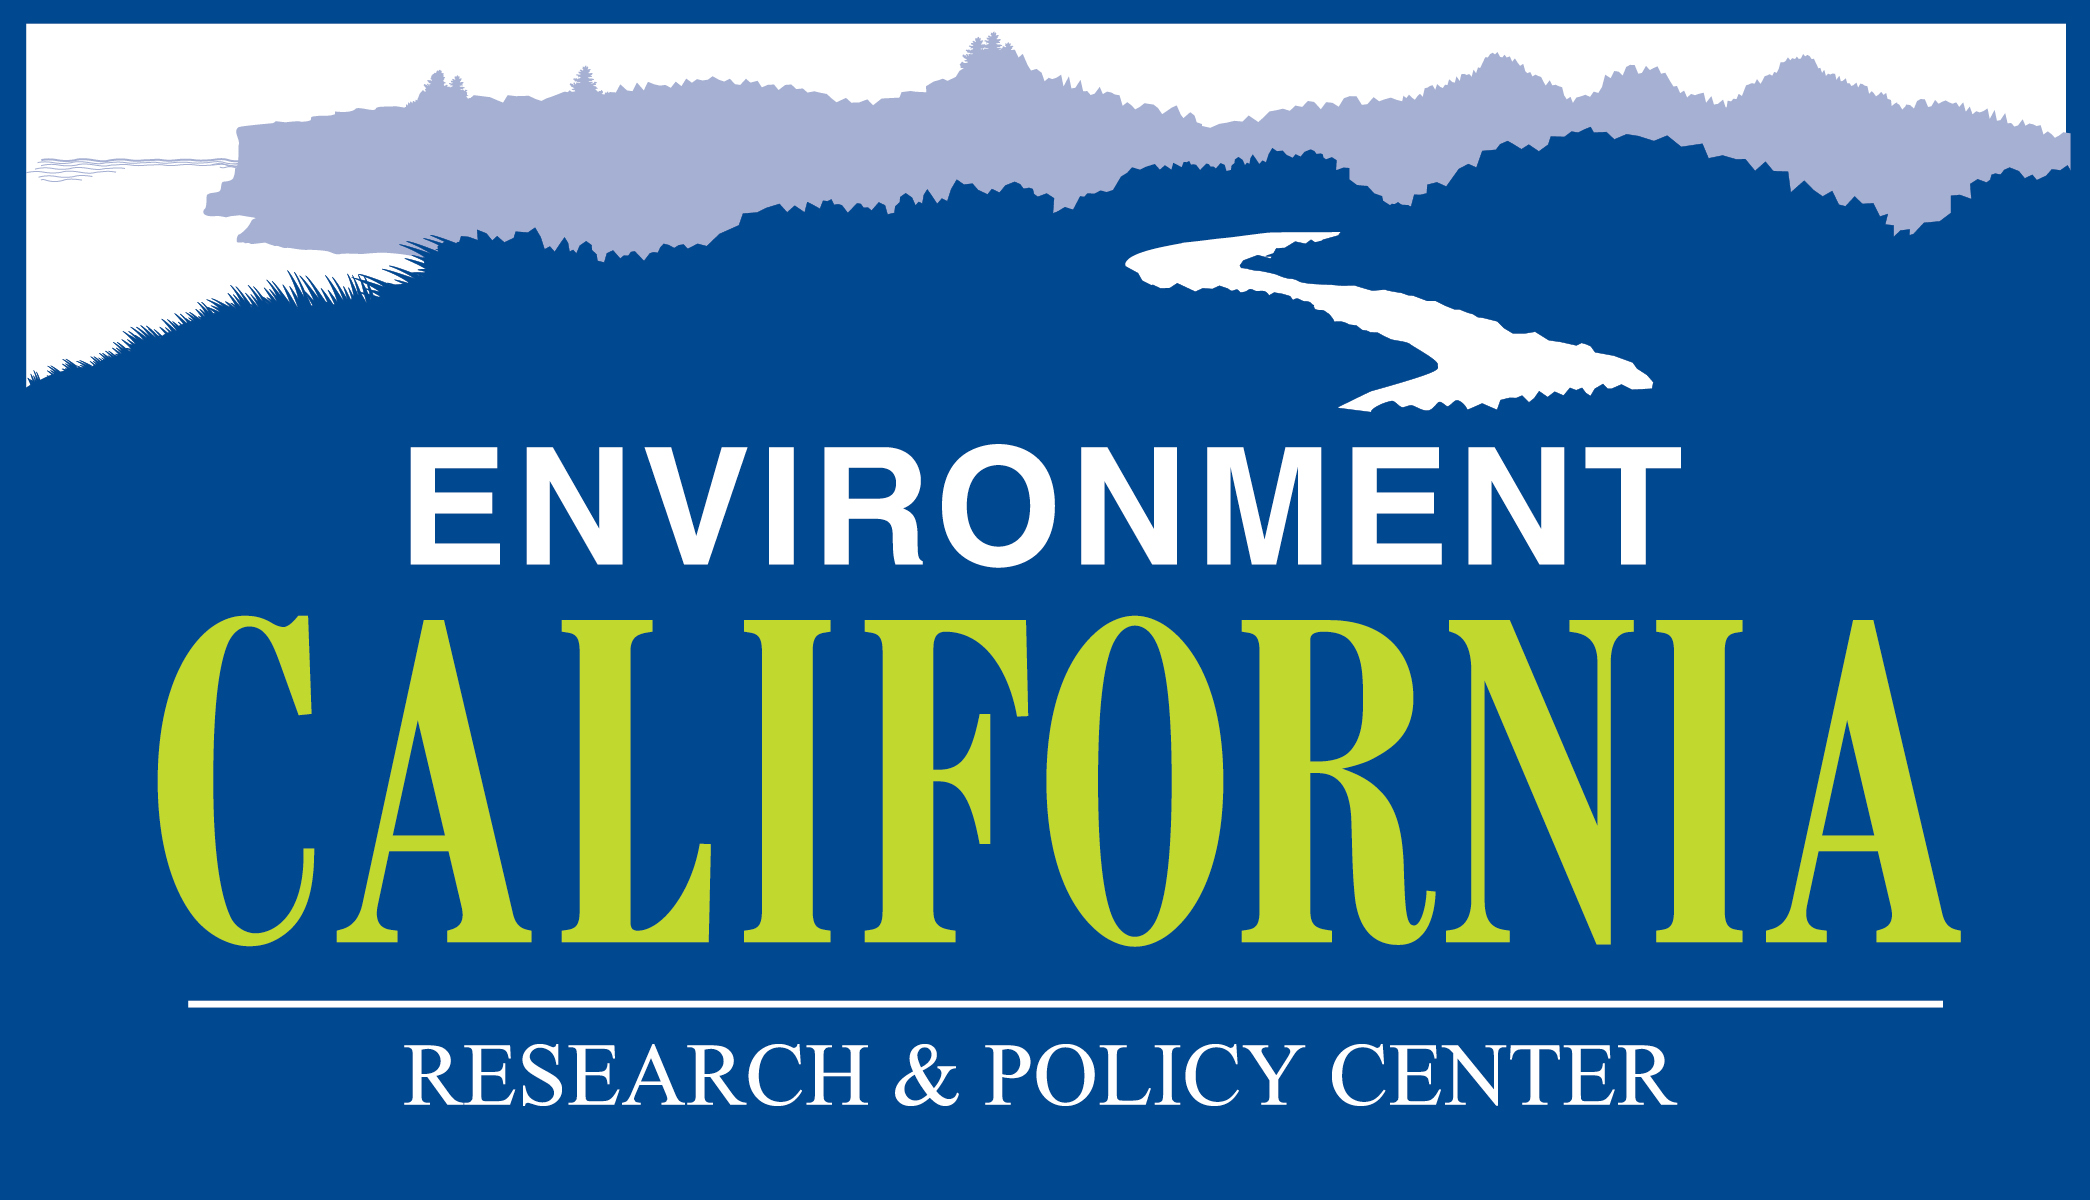 Environment California Research & Policy Center - high reso.jpg